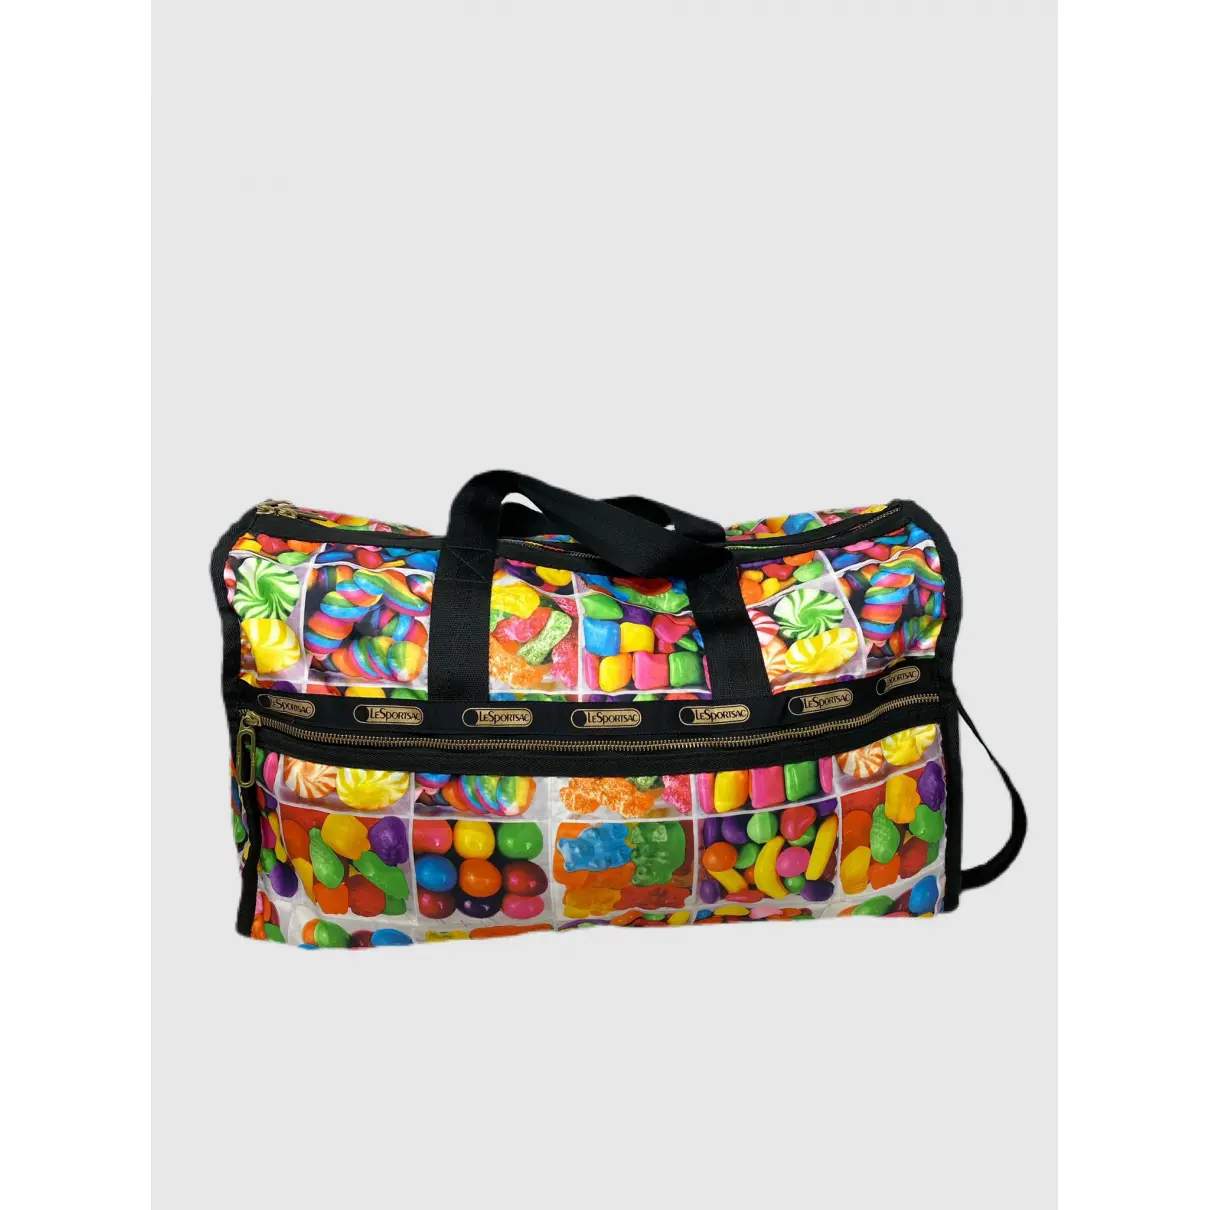 Buy Le sportsac Cloth travel bag online